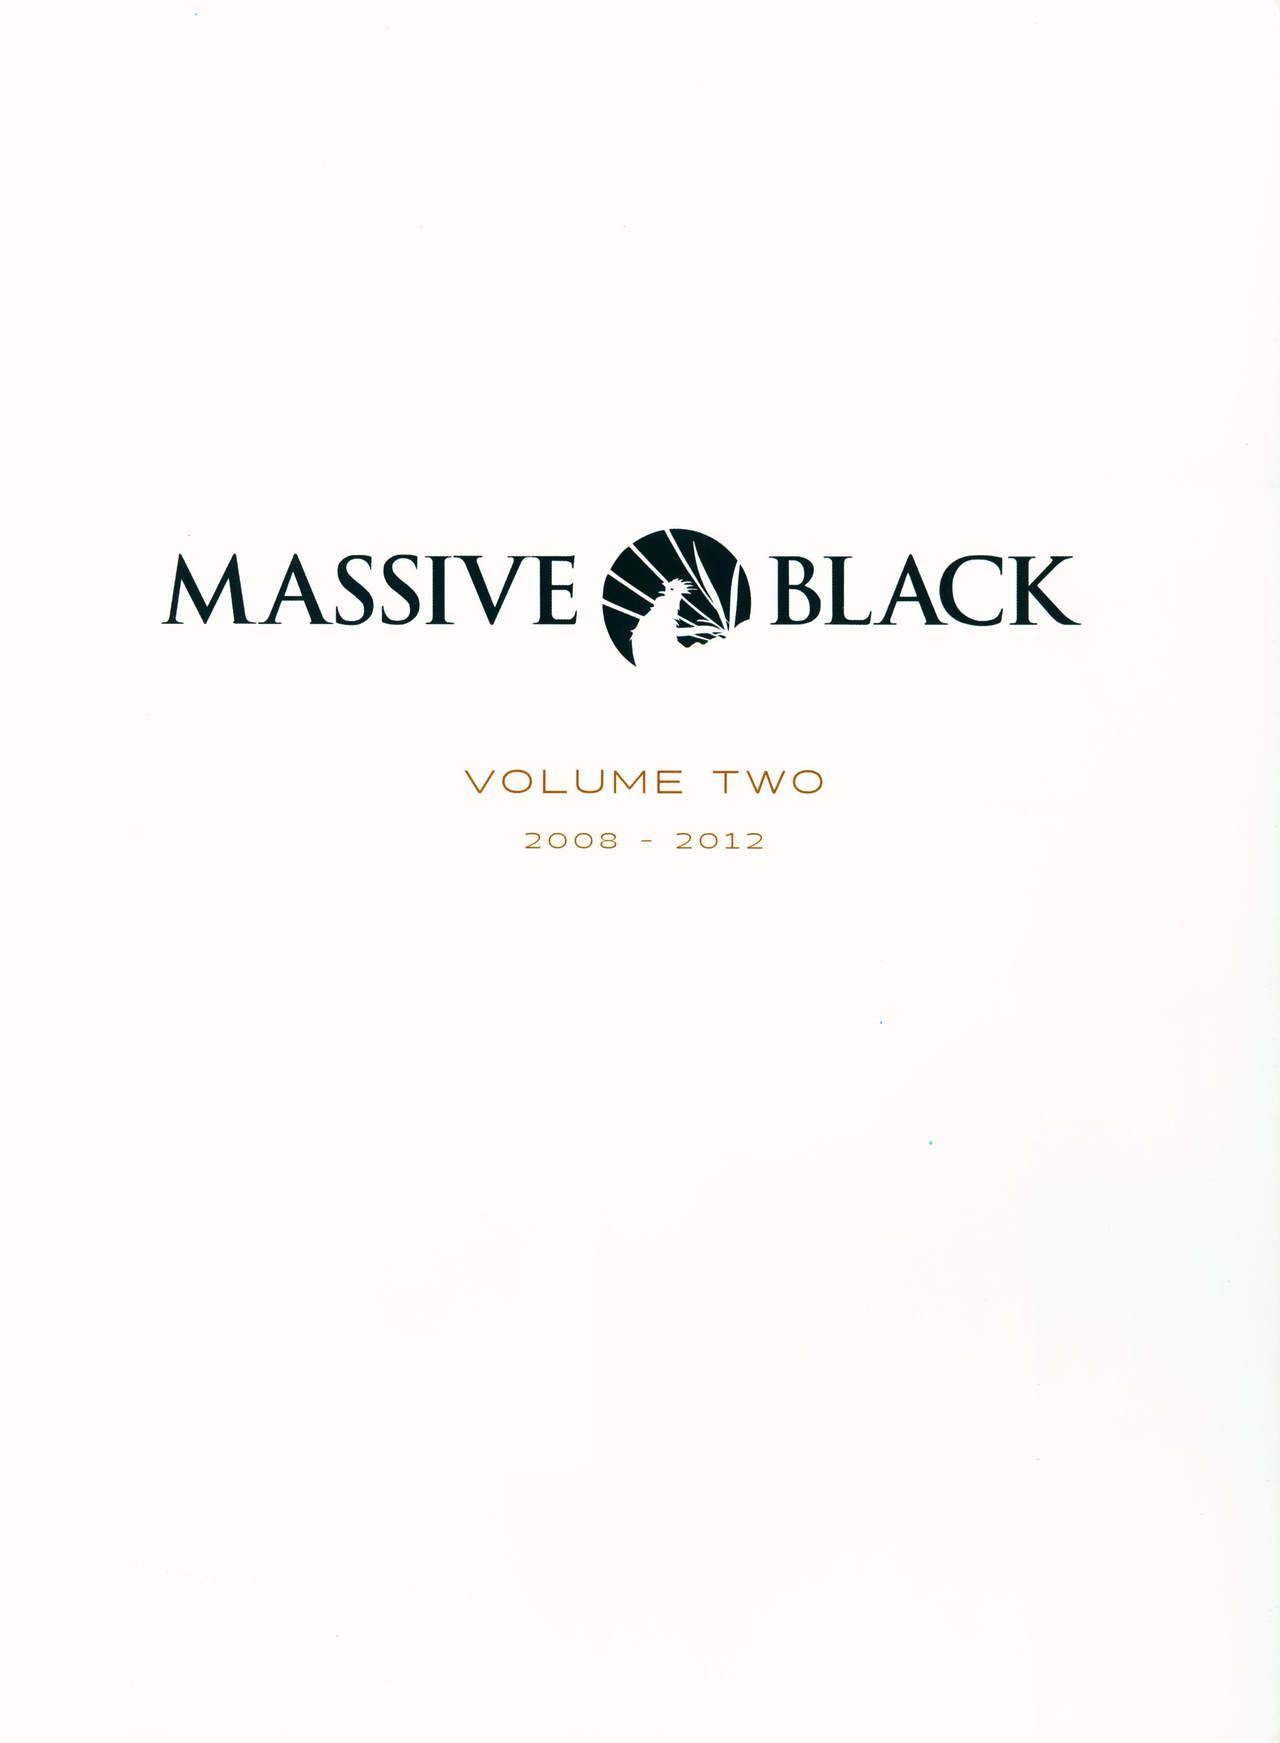 Massive Black Volume Two [English] 2